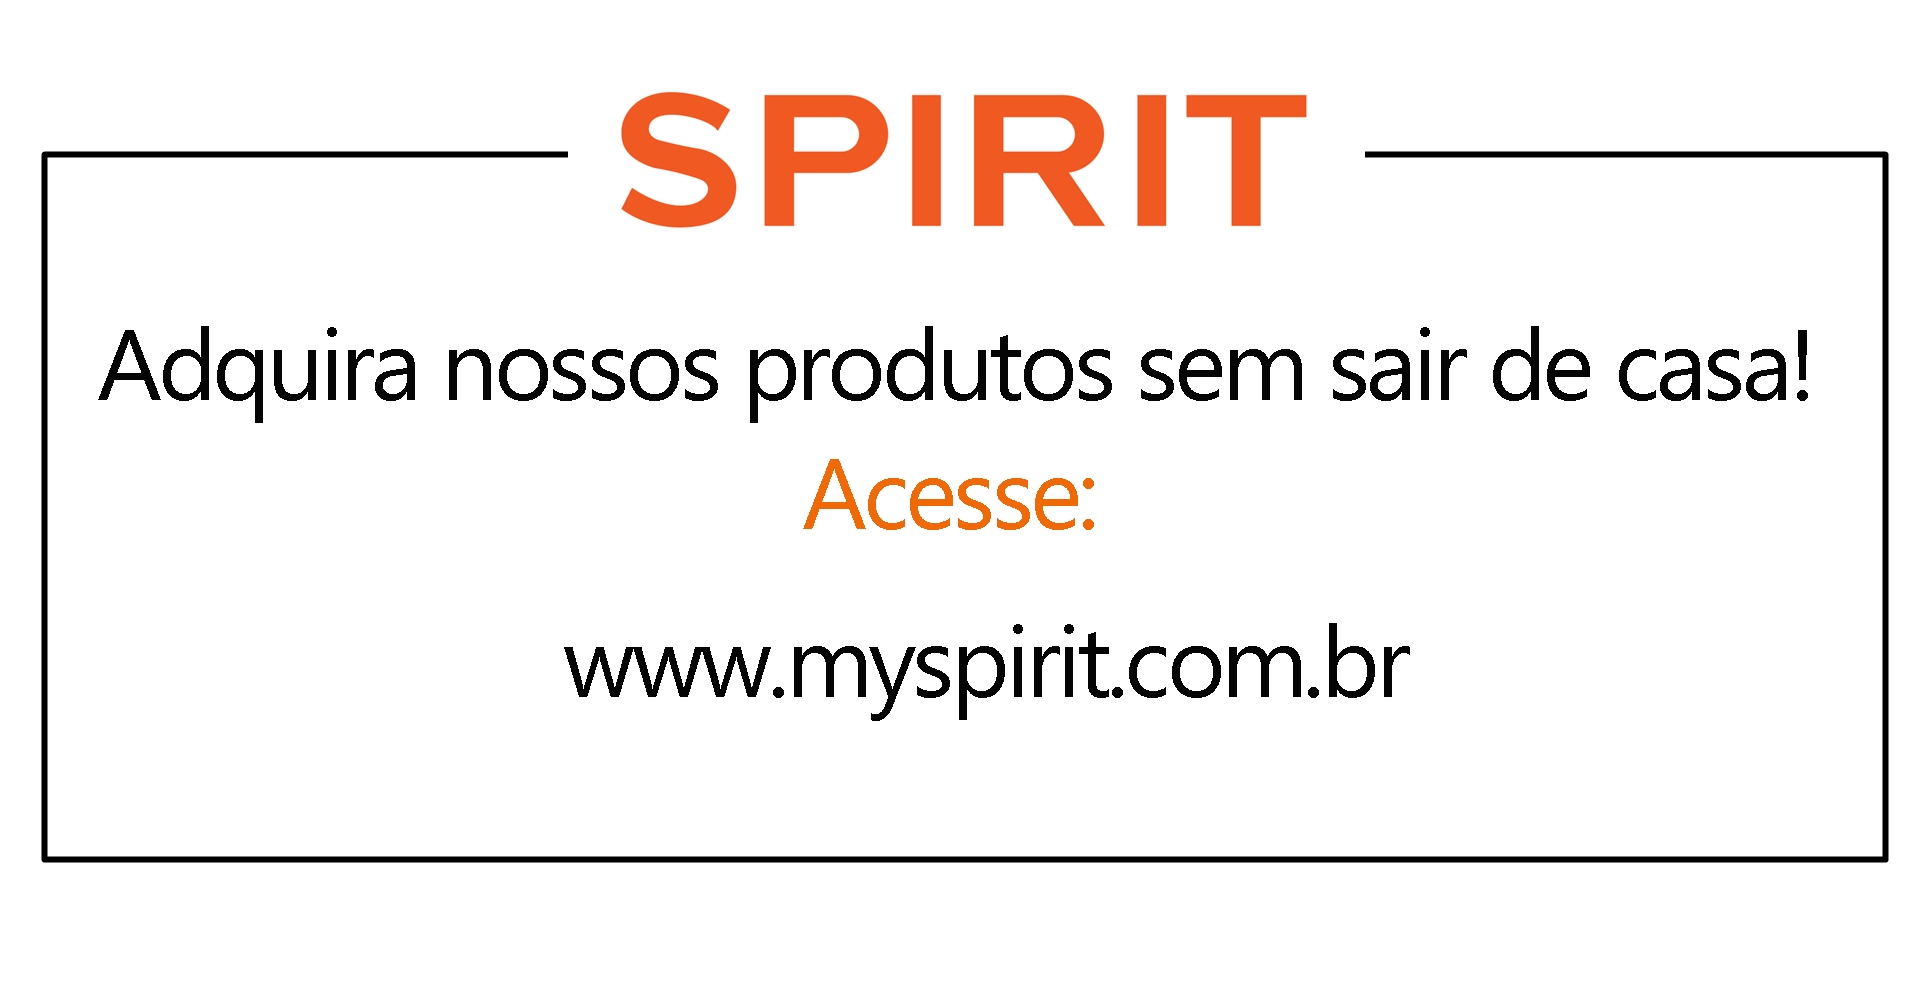 ventilador de teto - Blog Myspirit - banner site Spirit - Black Friday Spirit